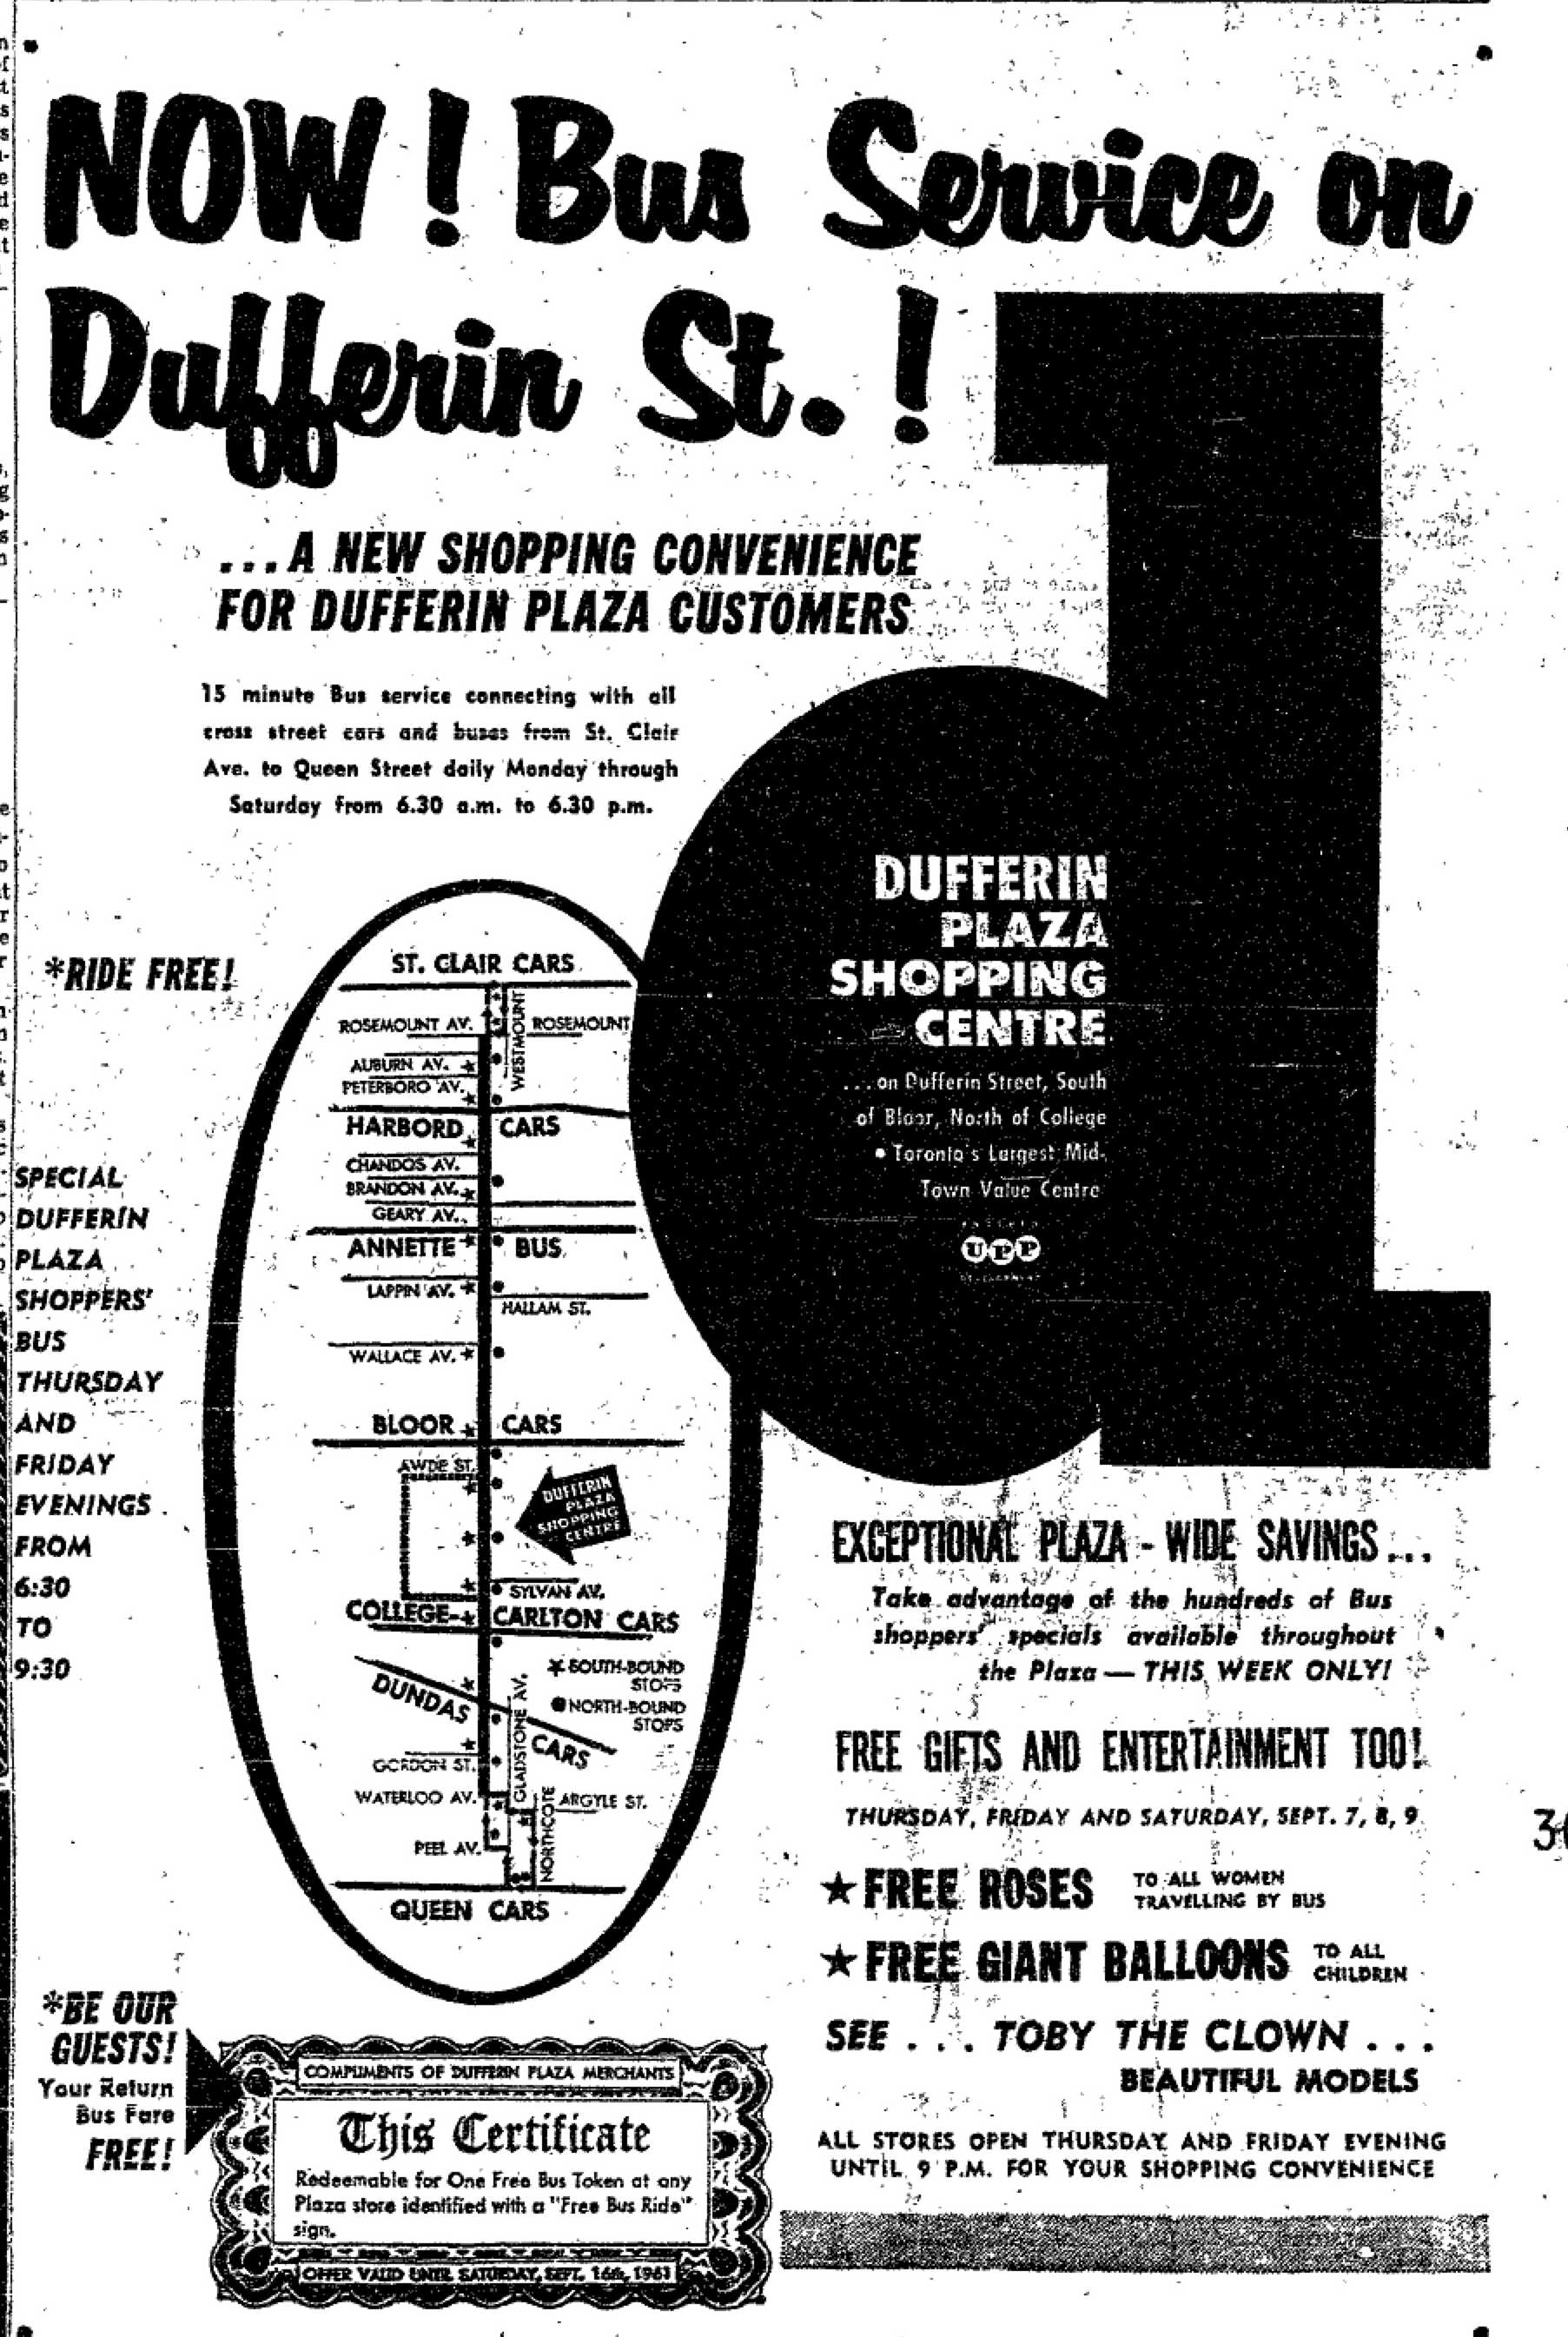 Dufferin Plaza advertisement, 1961